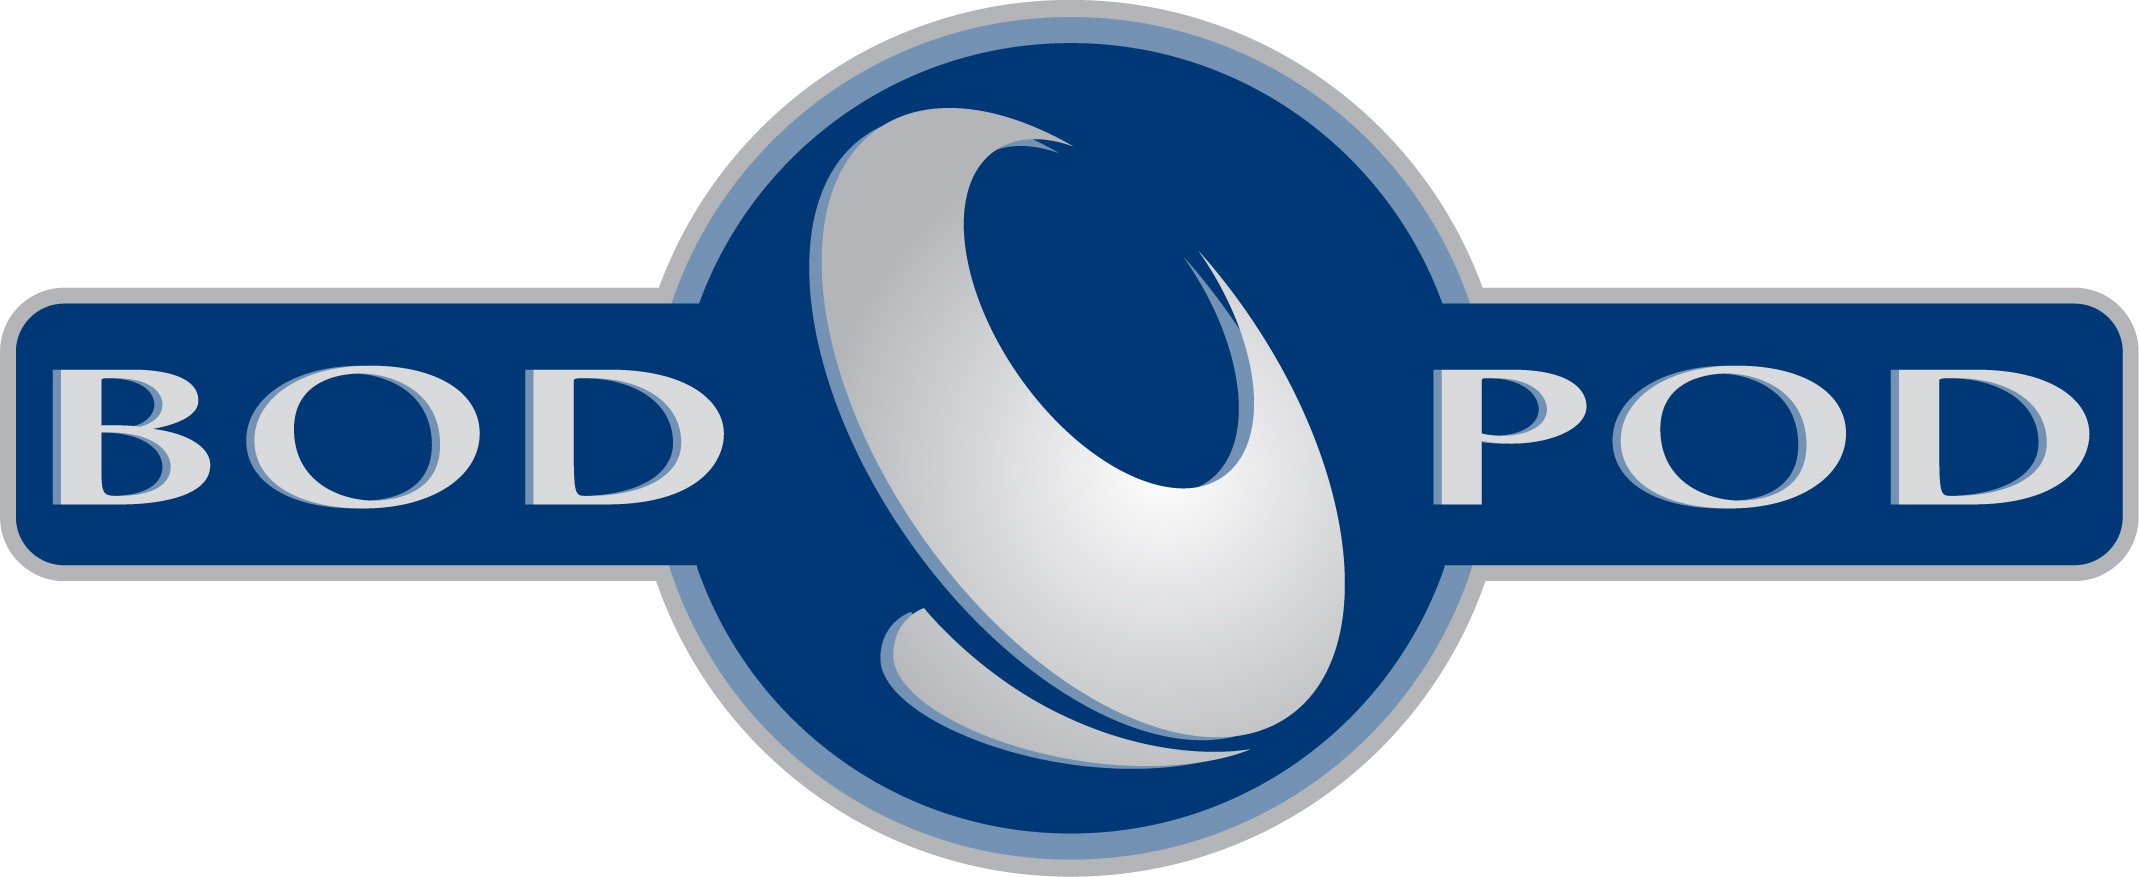 BOD POD General Logo.jpg